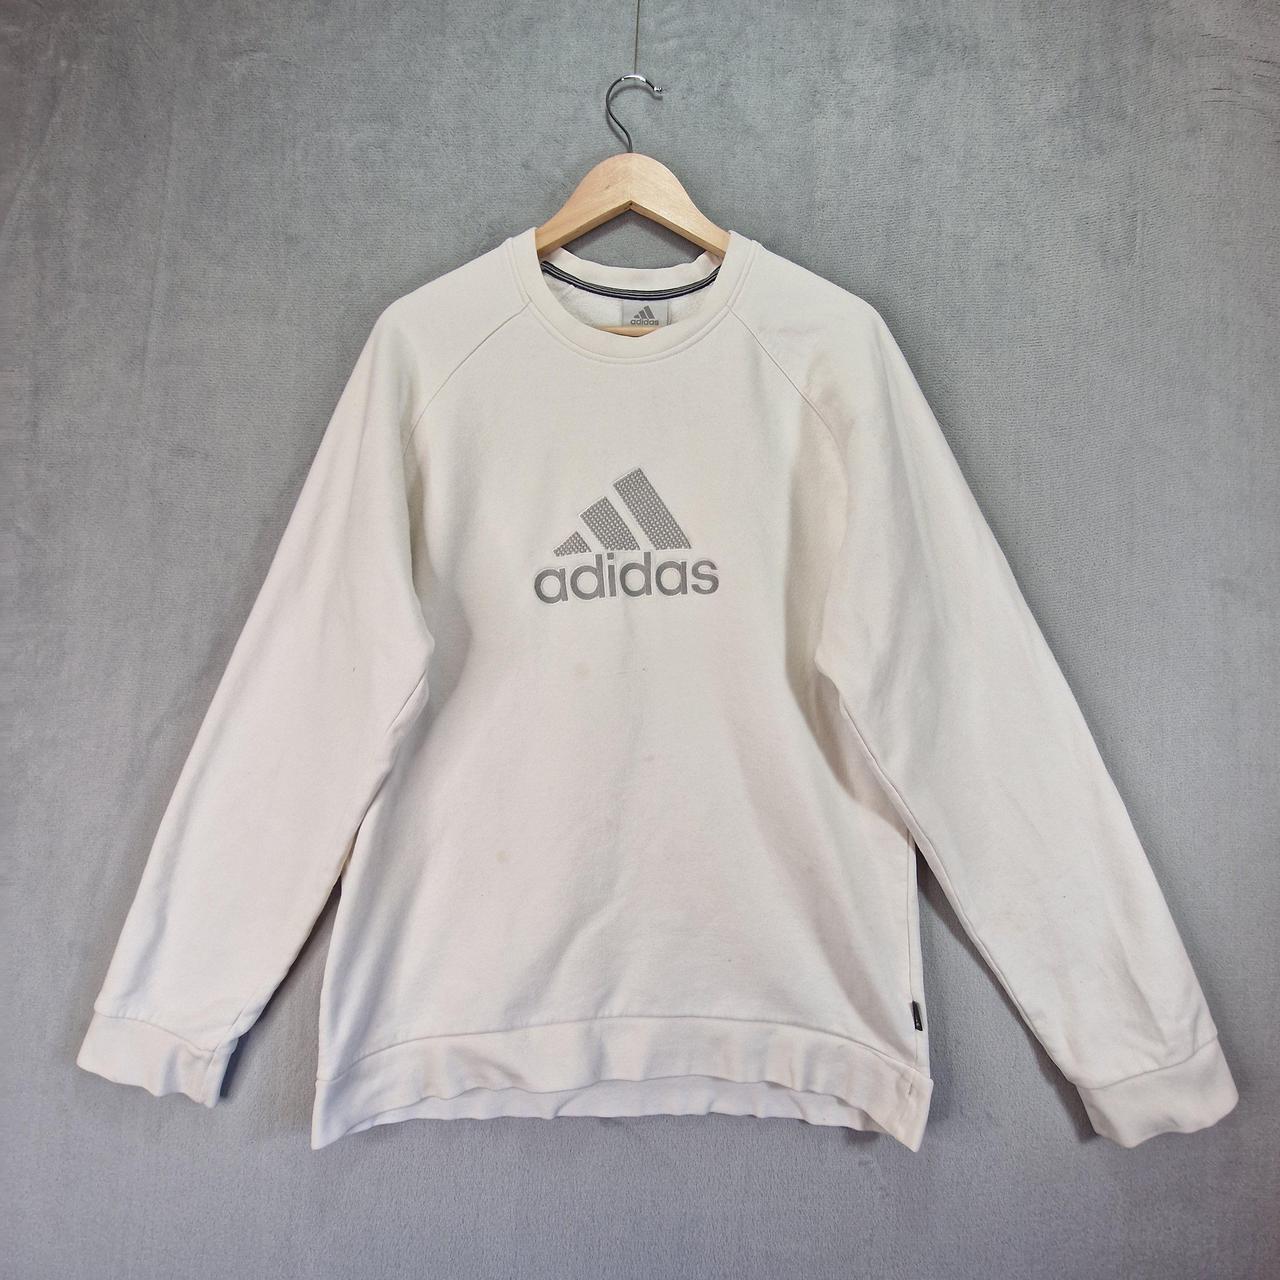 Adidas Sweatshirt Mens Large White Embroidered... - Depop